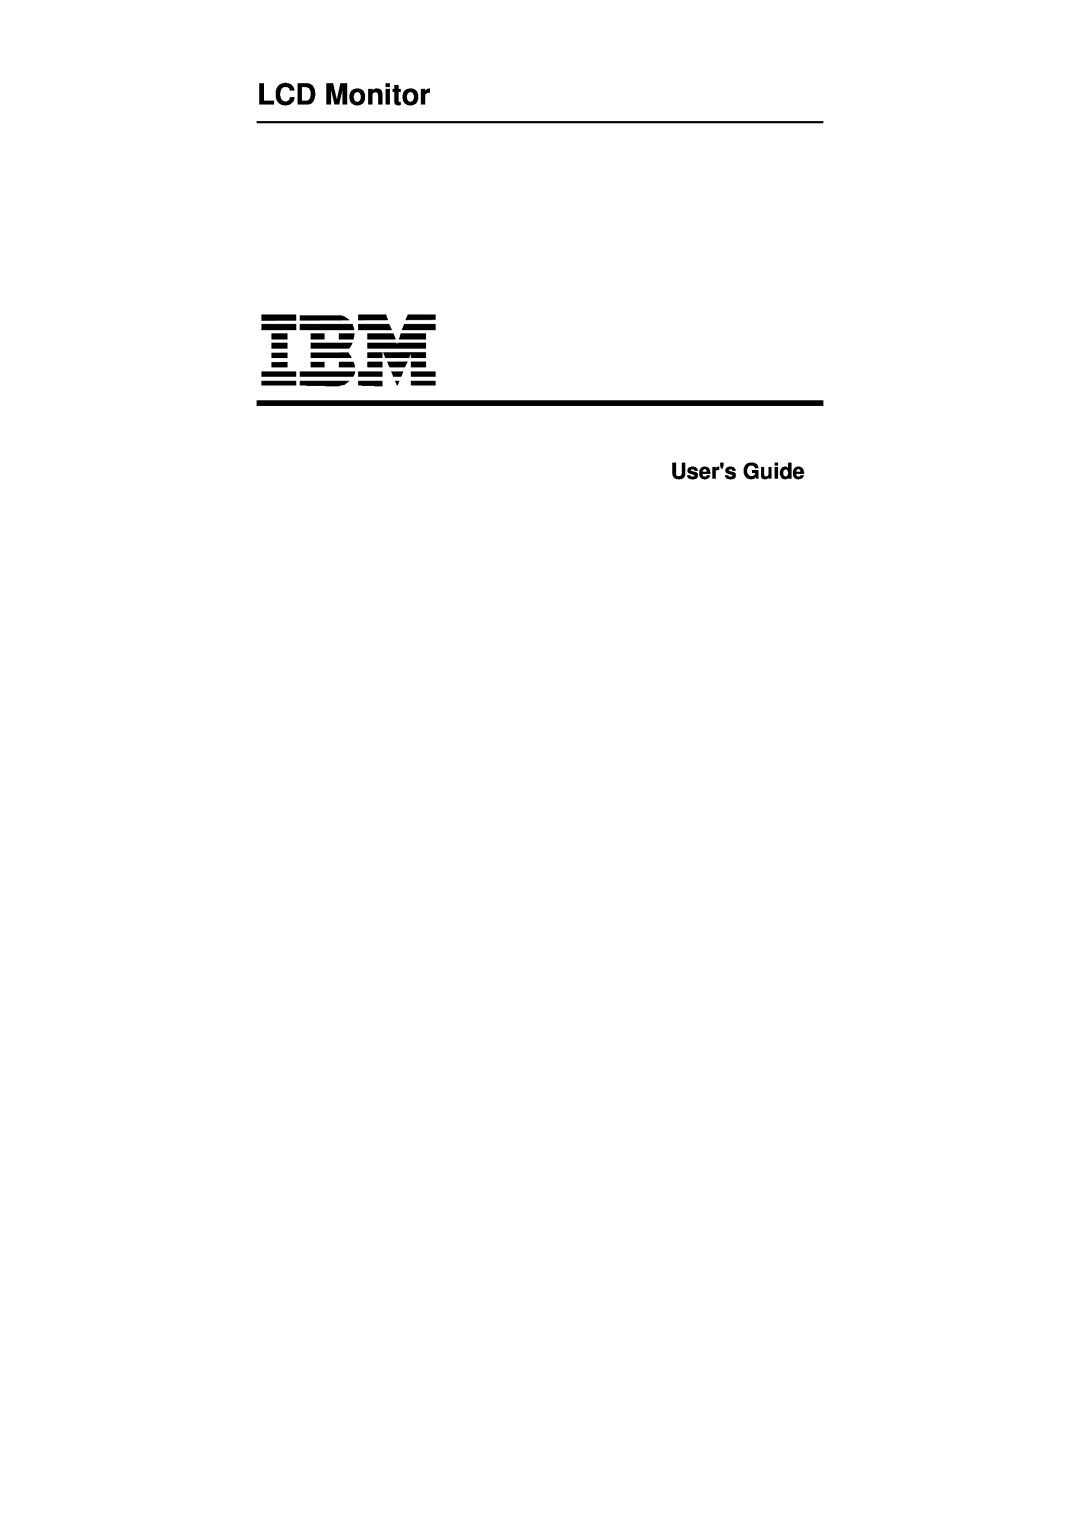 IBM Computer Monitor manual Users Guide, LCD Monitor 